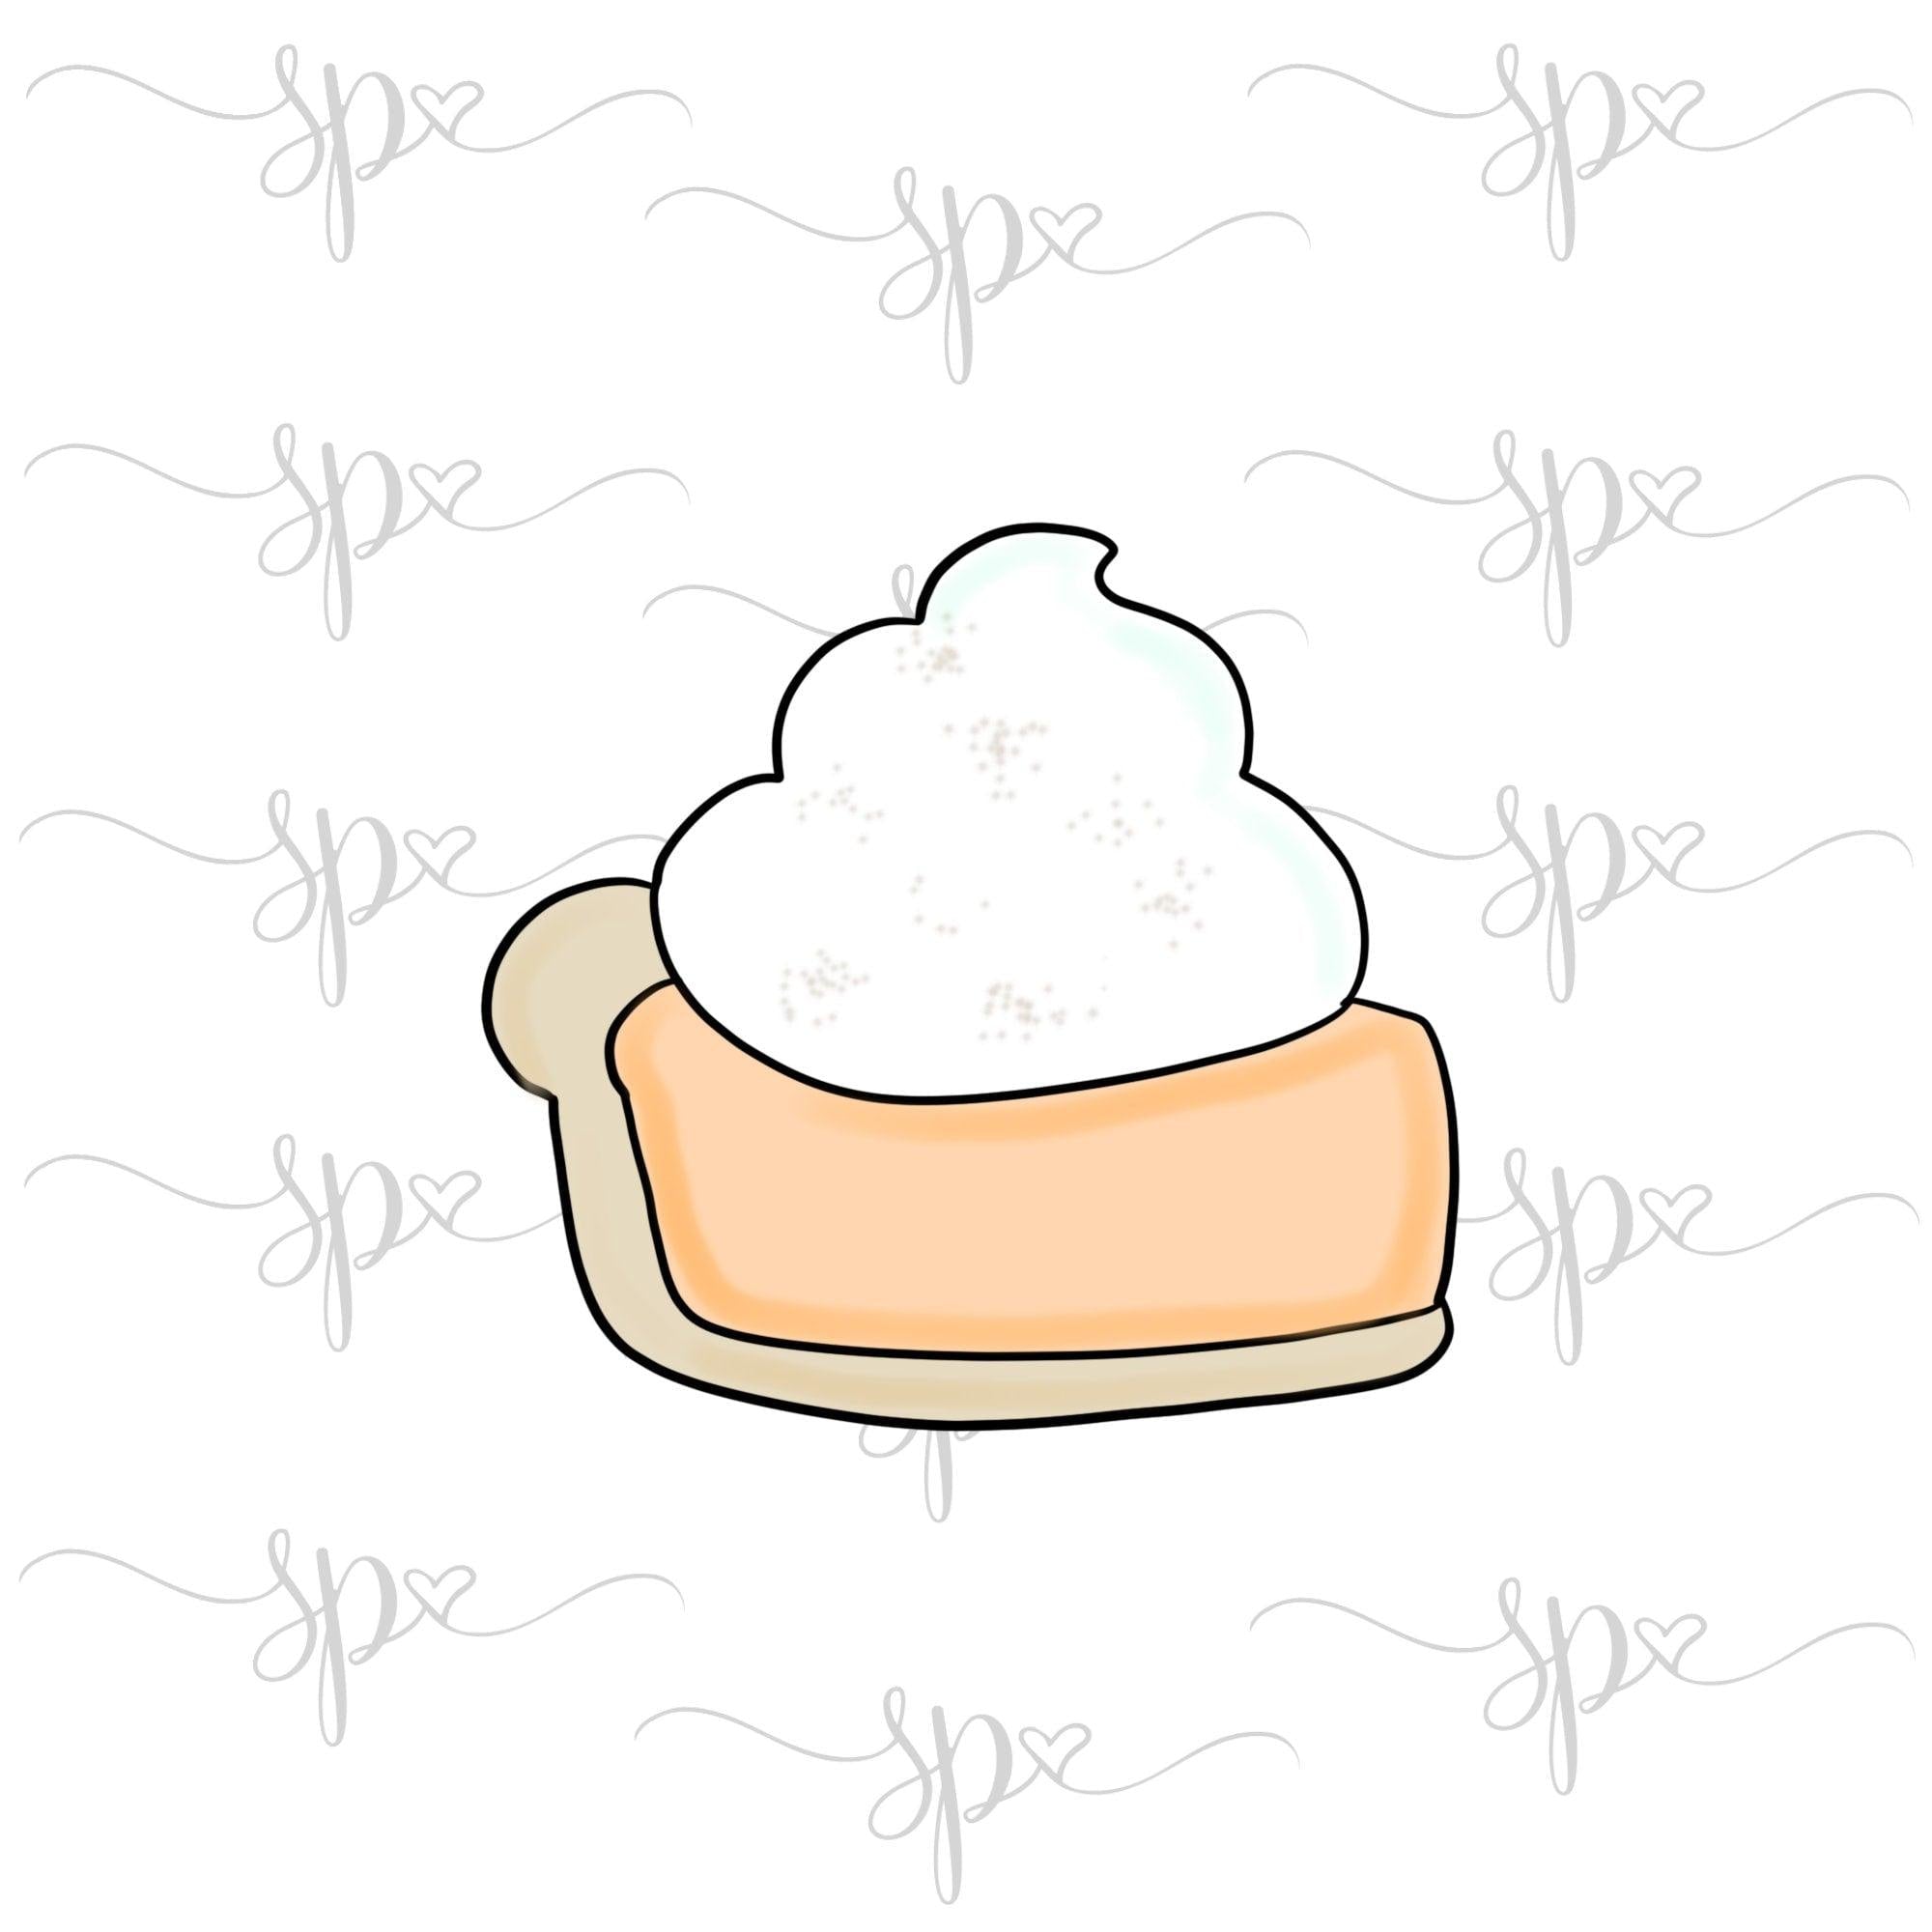 Pie Slice Cookie Cutter - Sweetleigh 